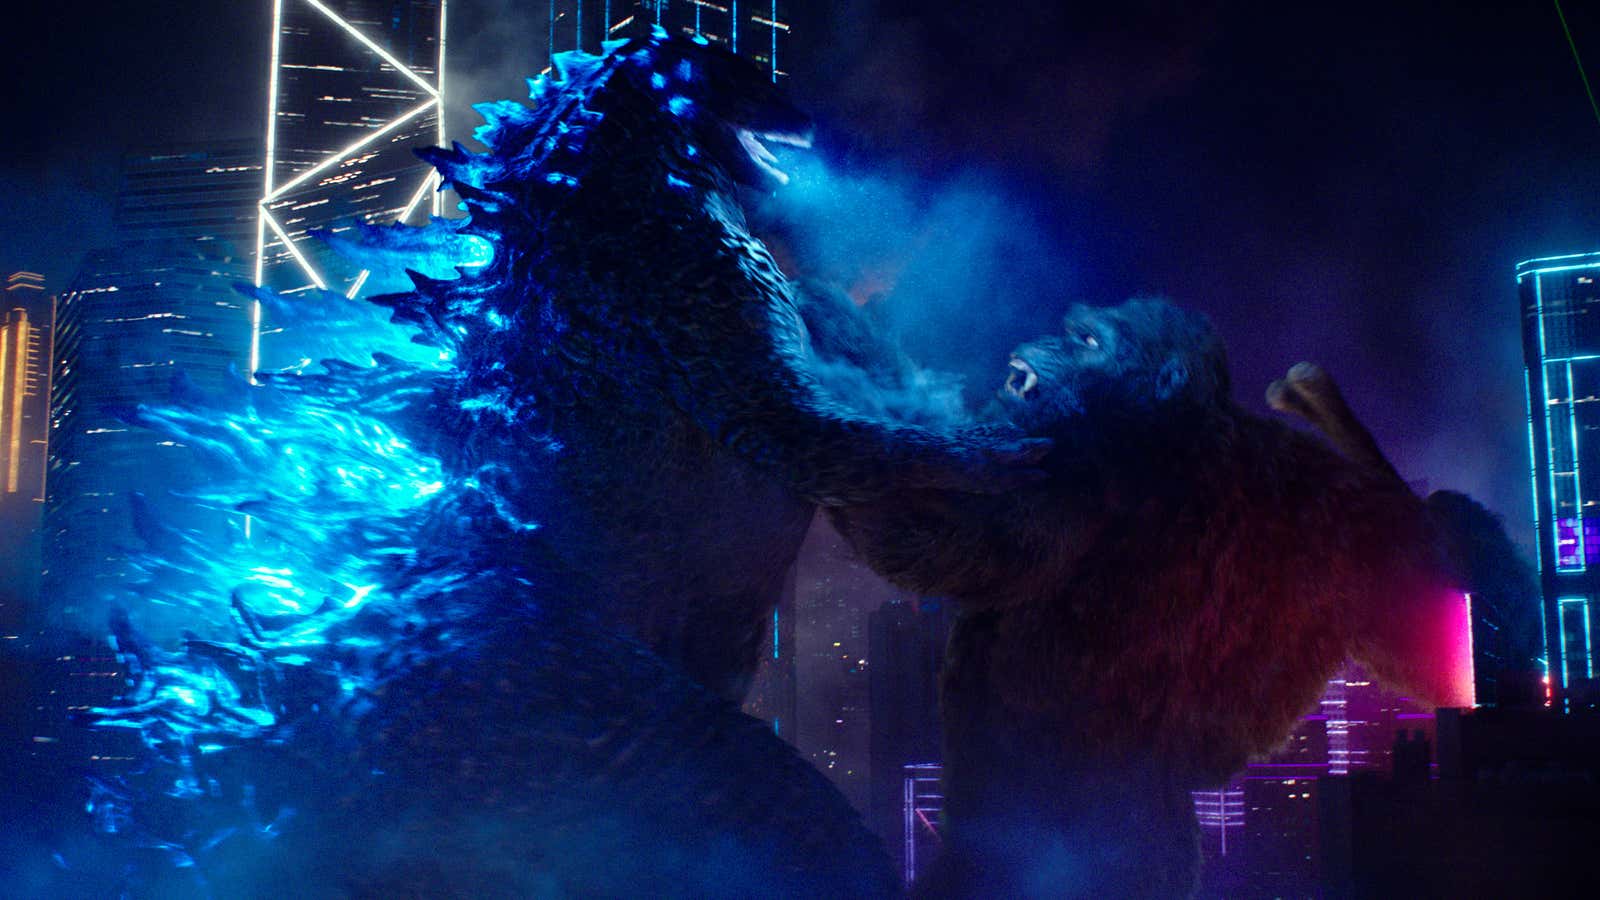 Godzilla Vs. Kong review: All the monster mayhem a fan might desire